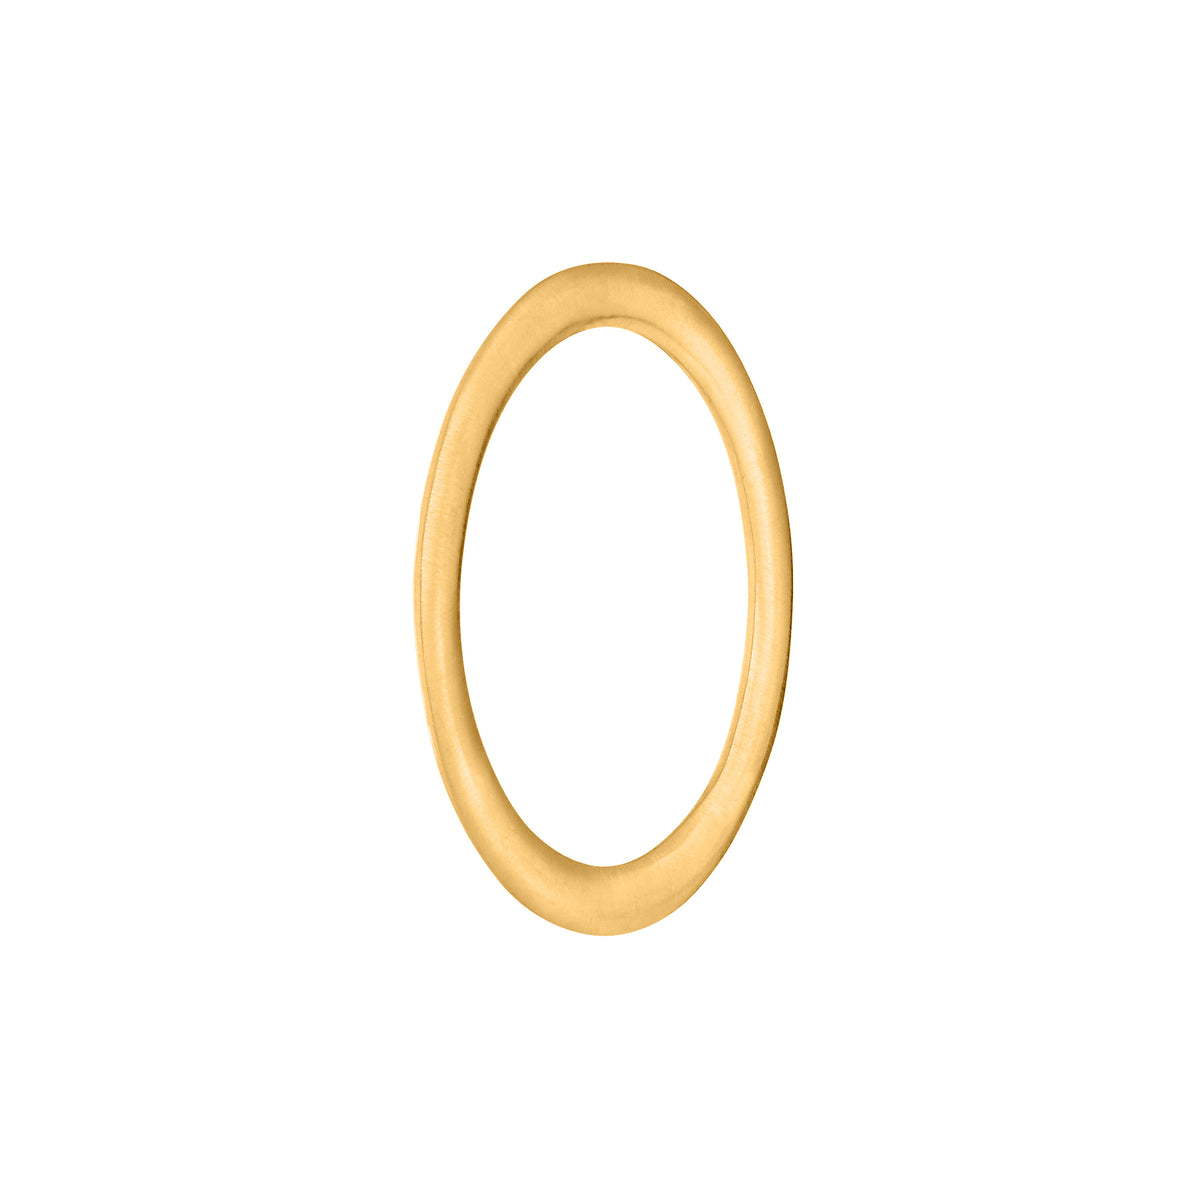 VIKA jewels gold plated vergoldet Circle Pendant Kreis Anhänger Kette Necklace handmade statement sustainable ethical bali berlin nachhaltig